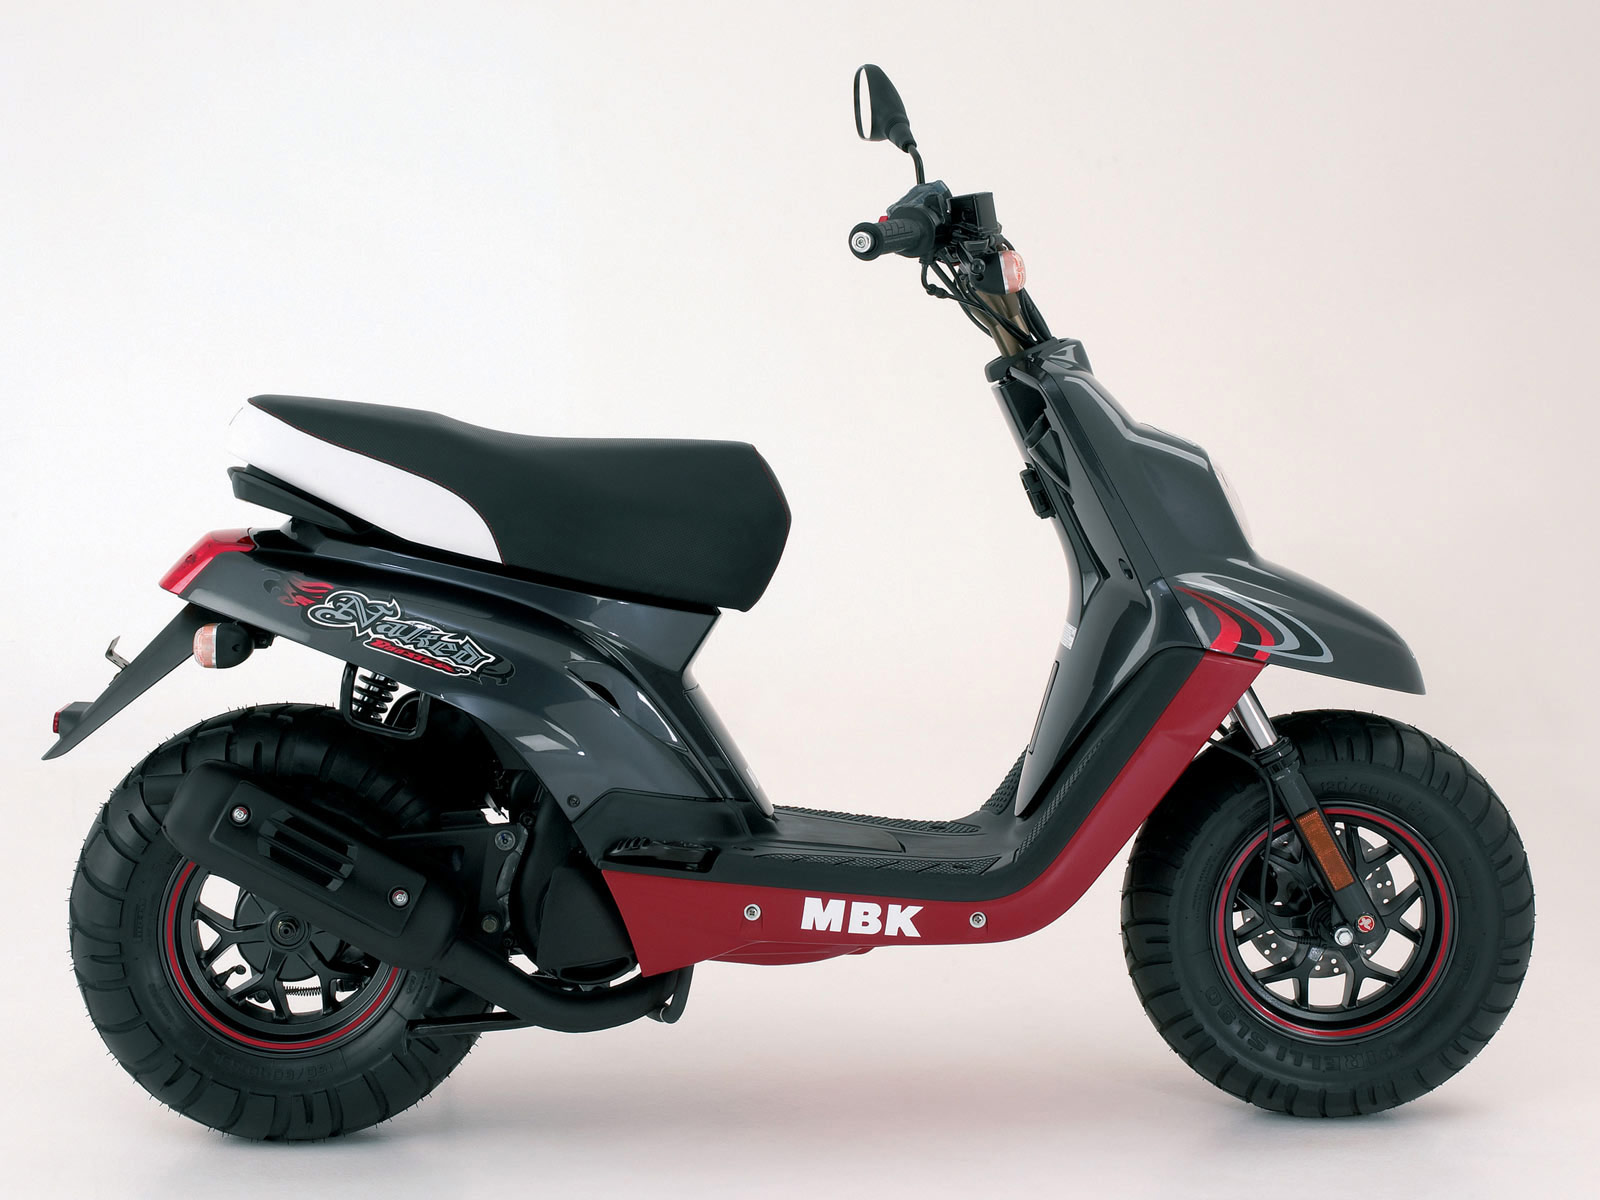 Mbk2006. MBK-152. MBK Booster ng колёса. Ручной скутер